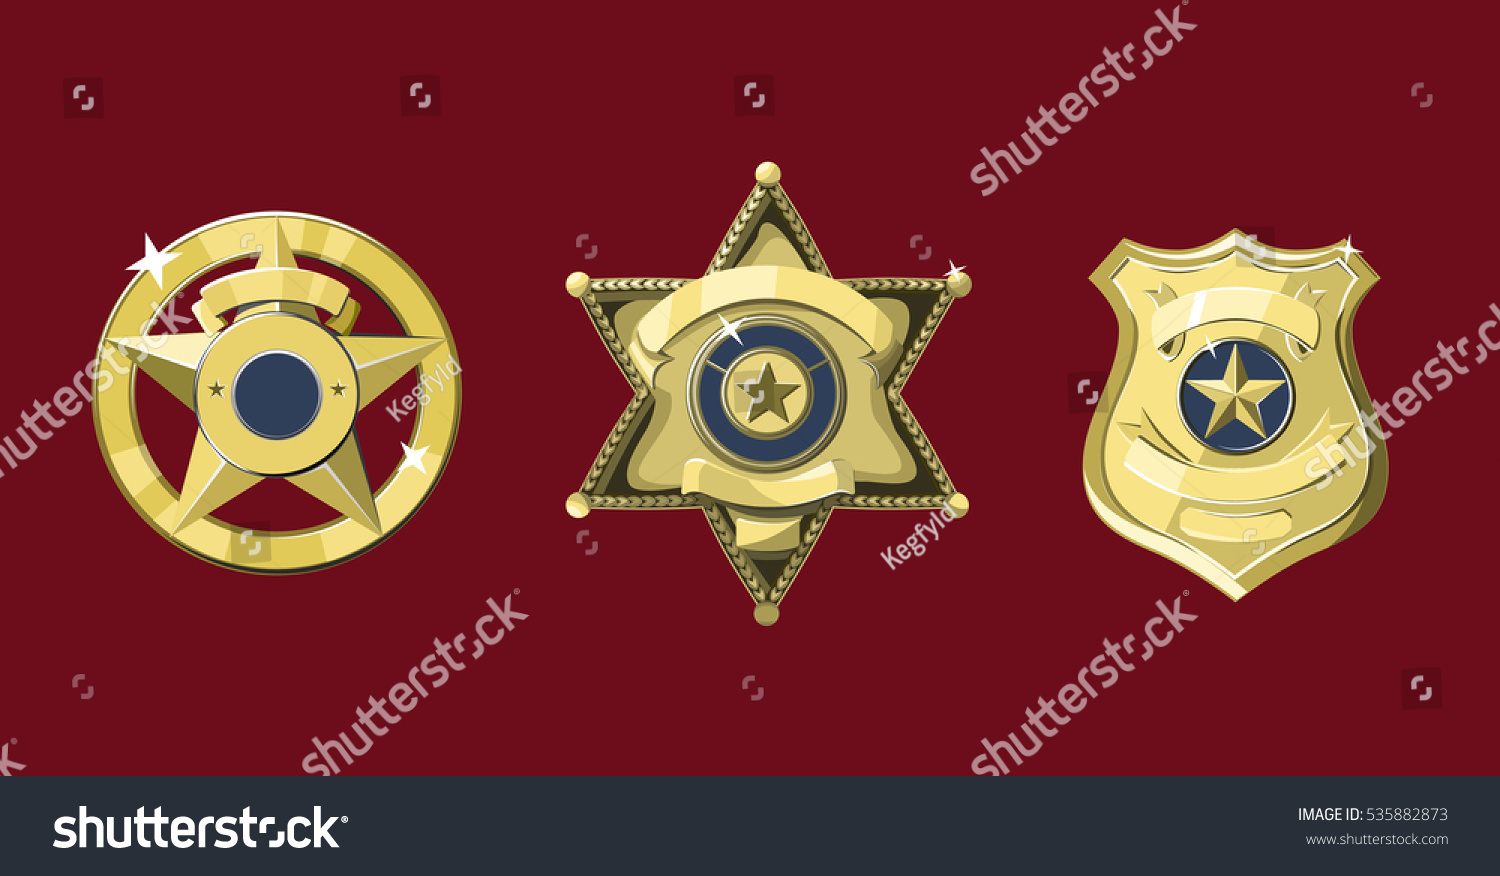 SVG of Golden police and sheriff badges on dark red background svg